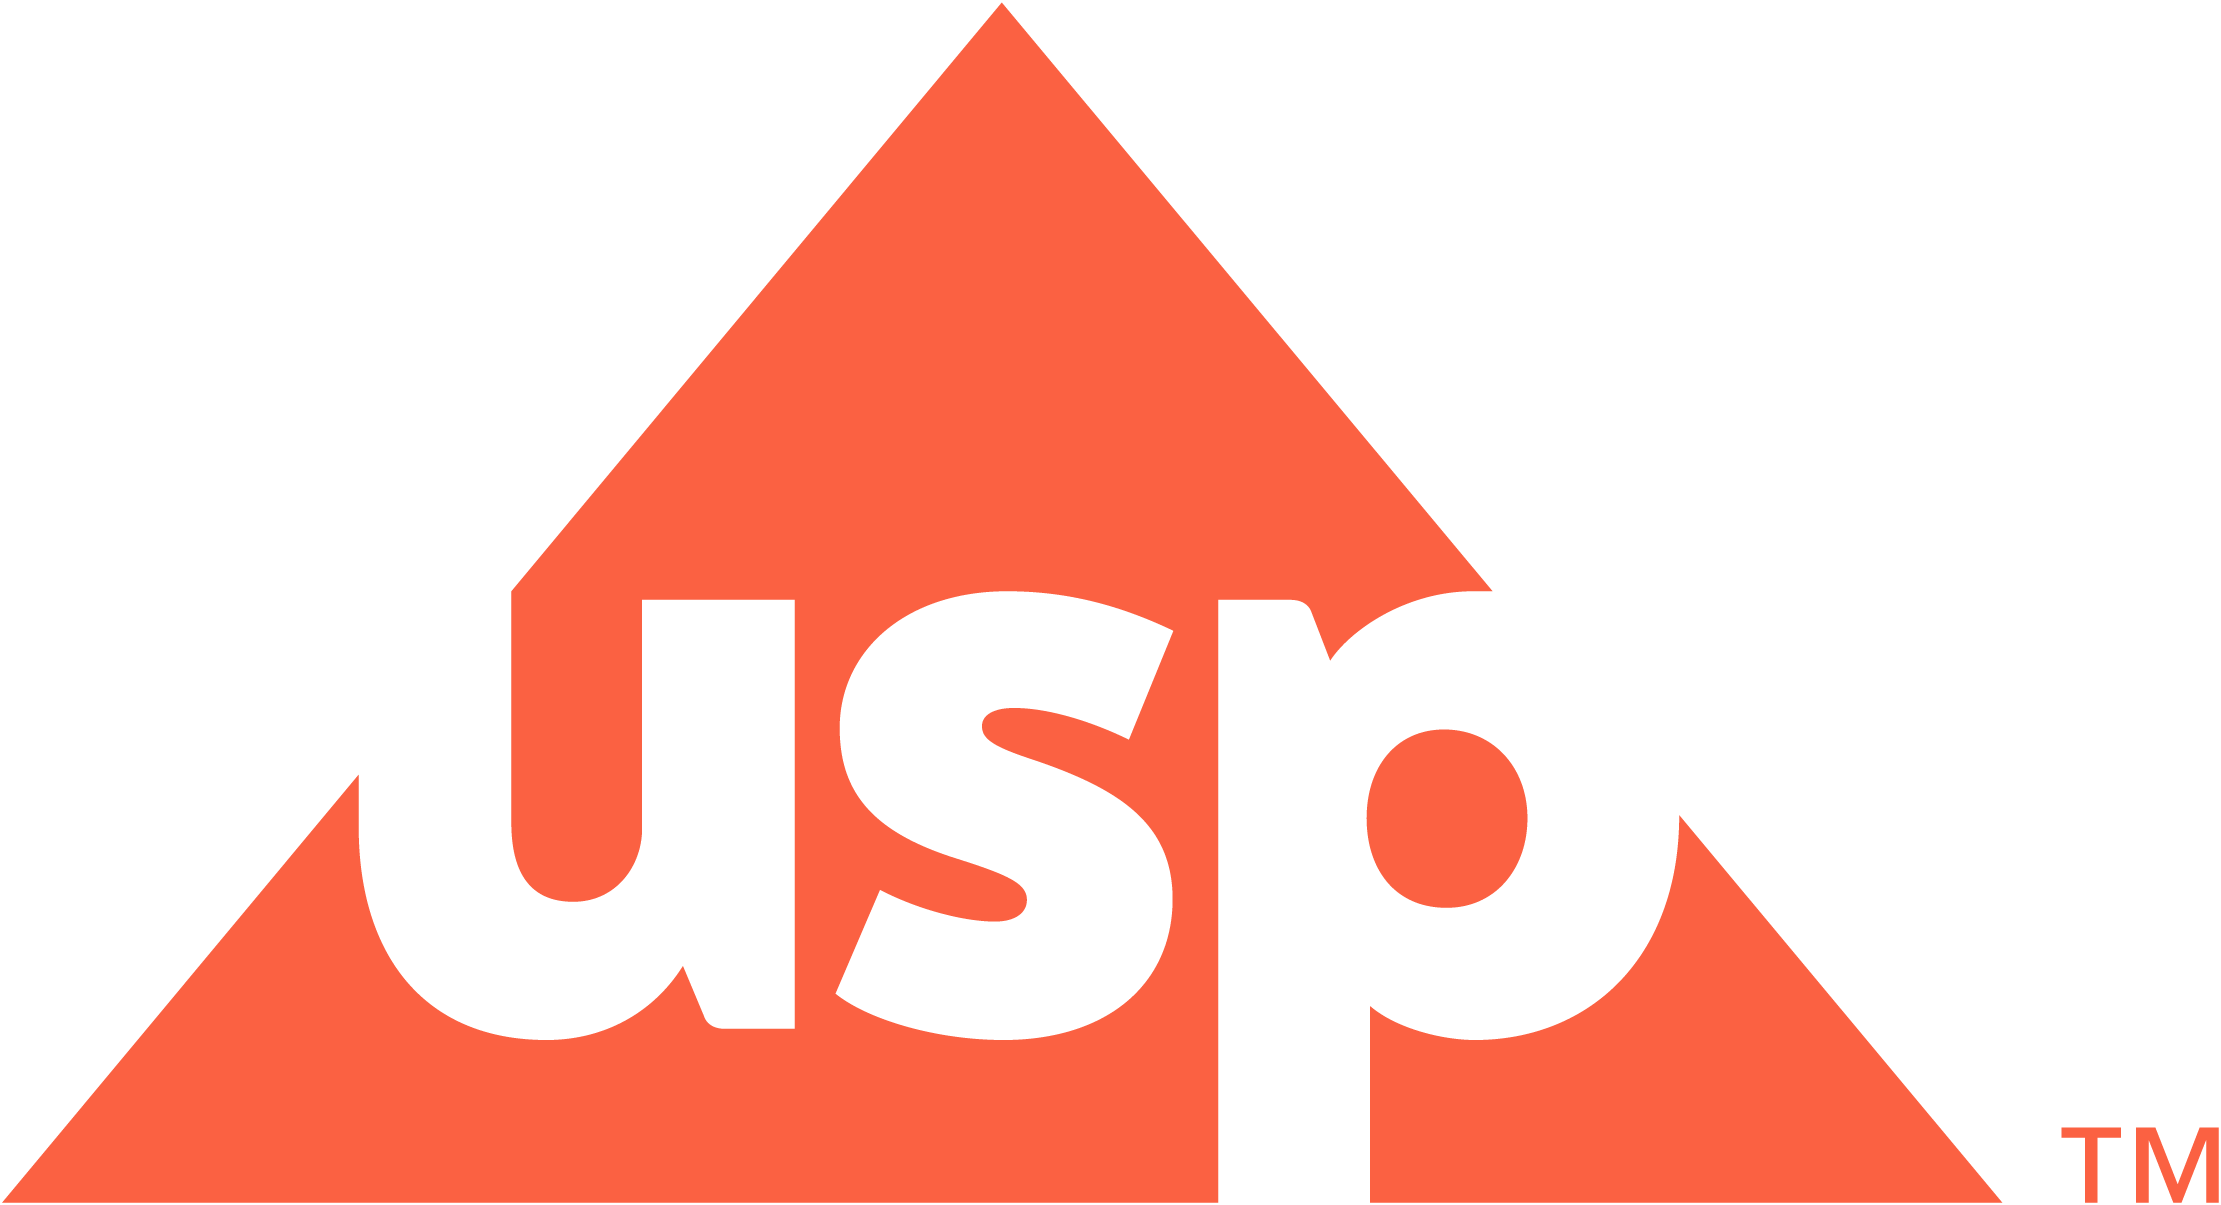 usp-new.png